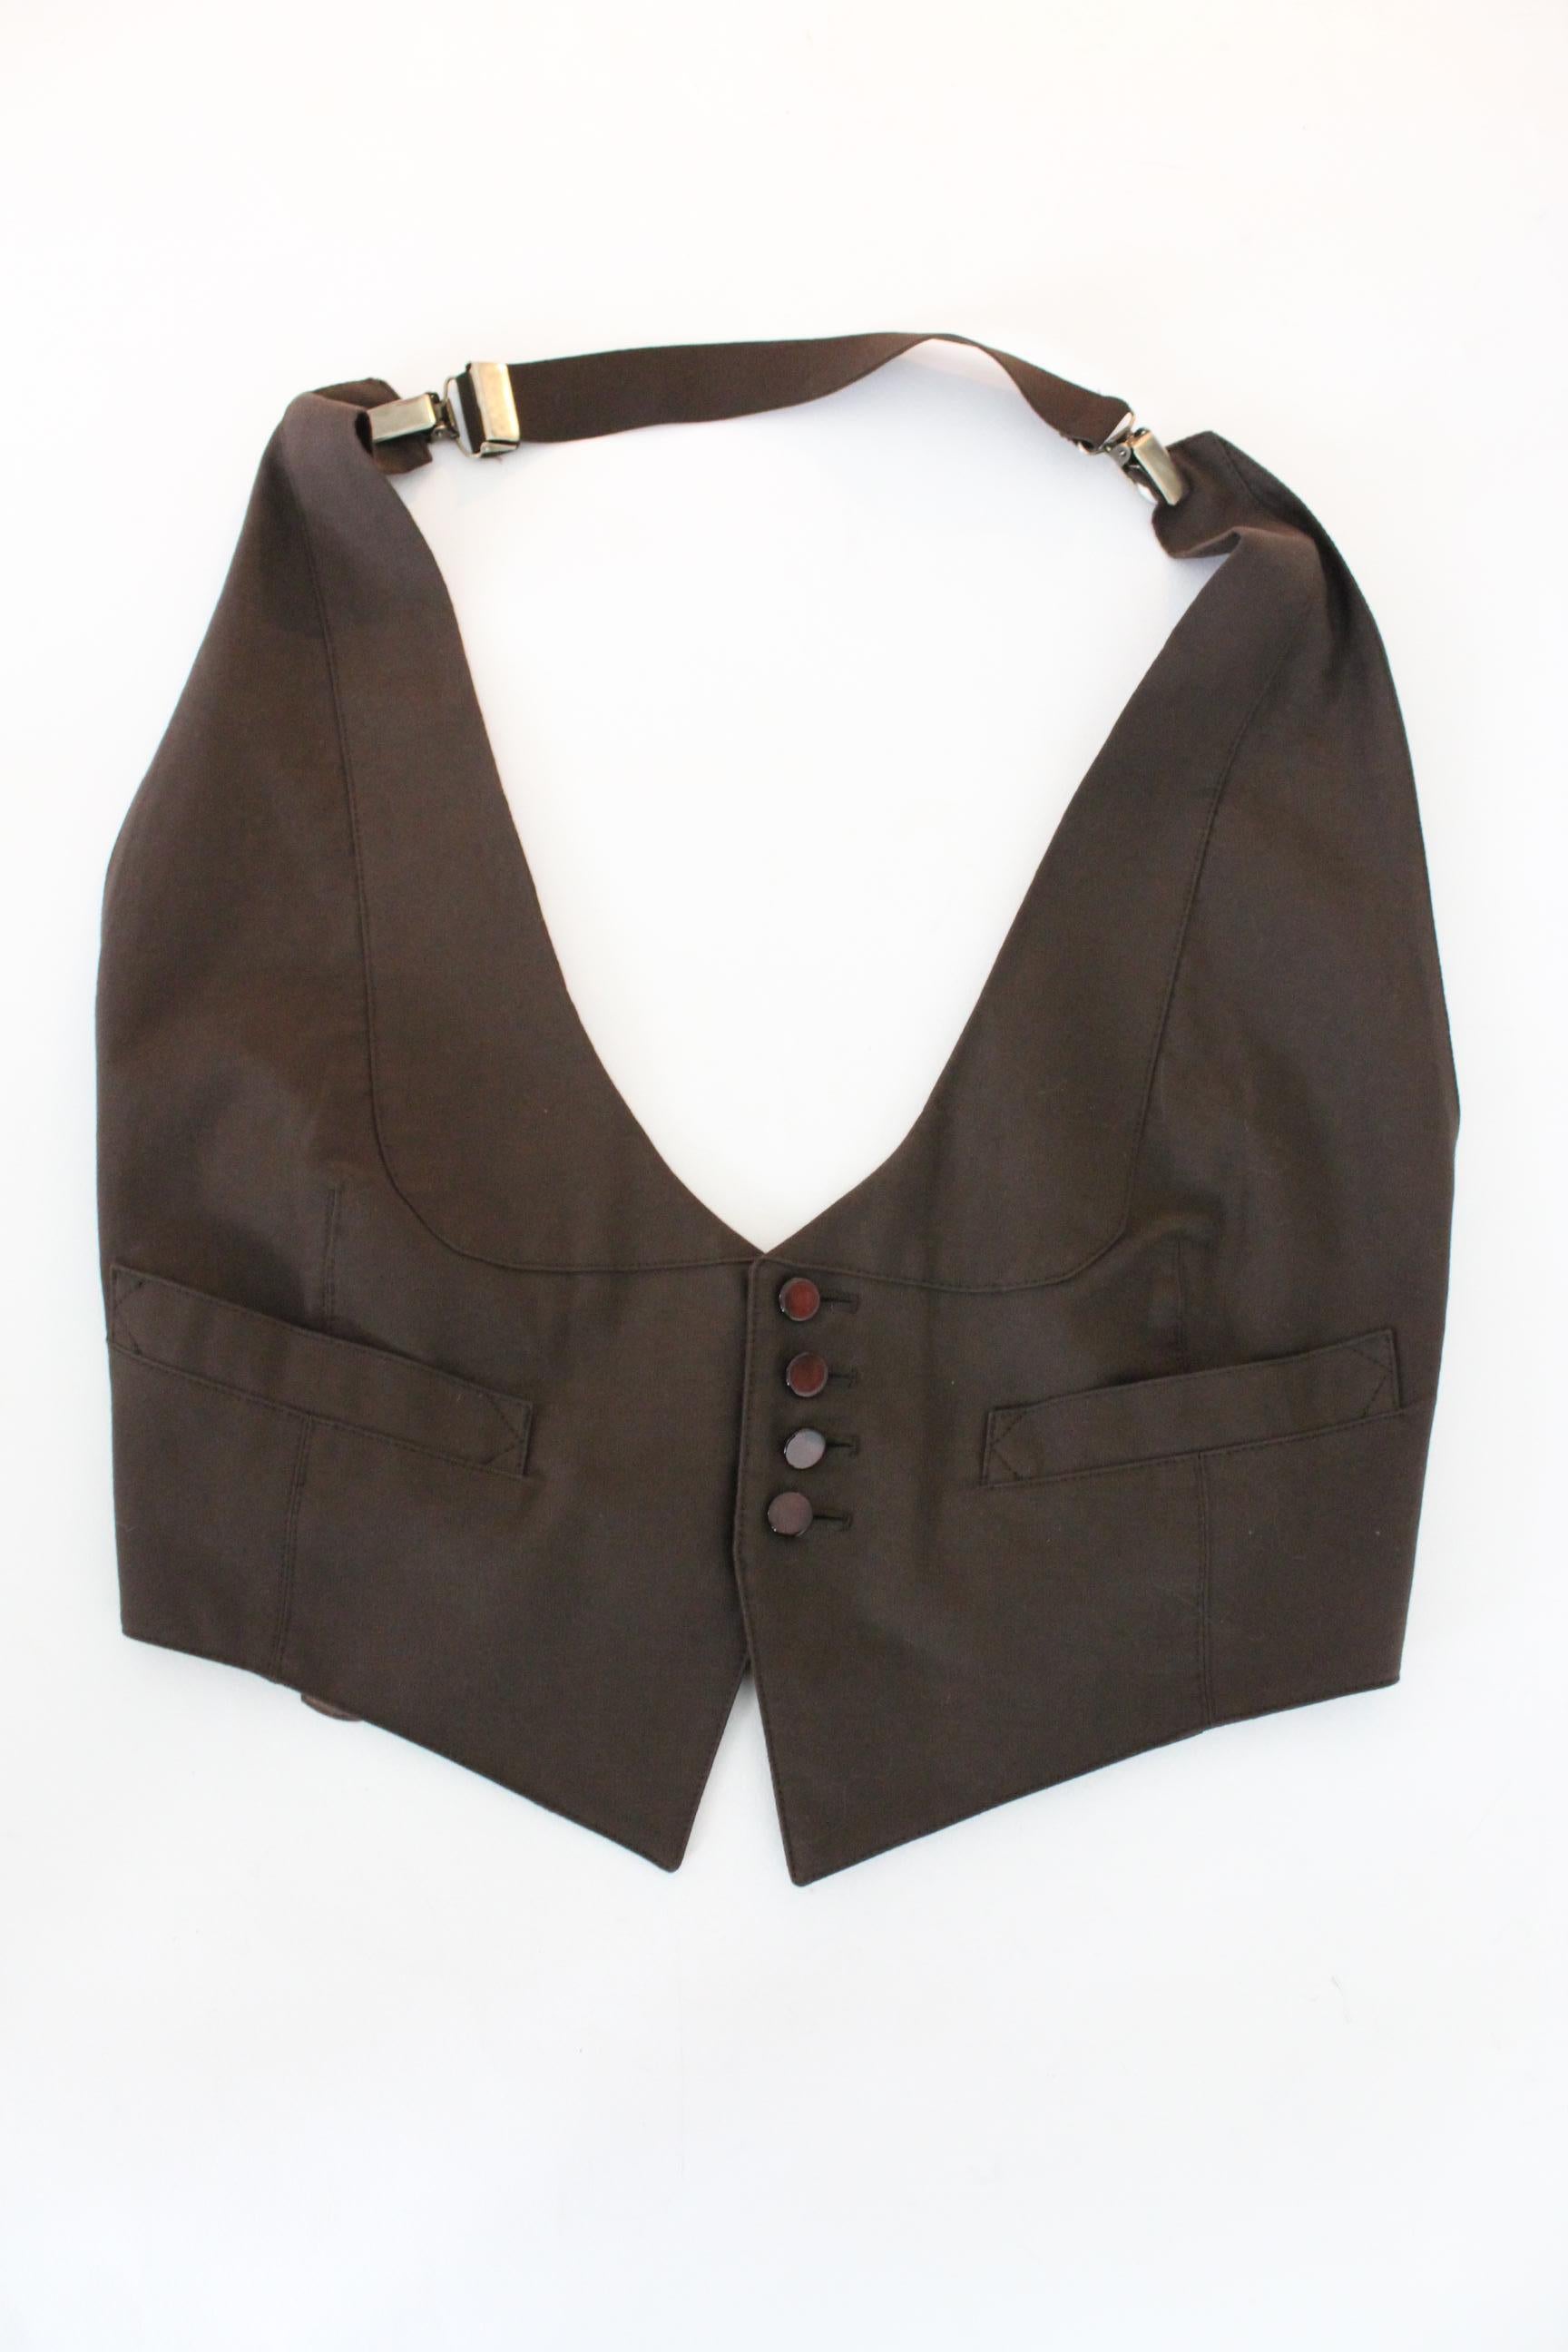 Jean Paul Gaultier Vest Corset Brown 1990s Cotton Striped Waistcoat Gilet  2